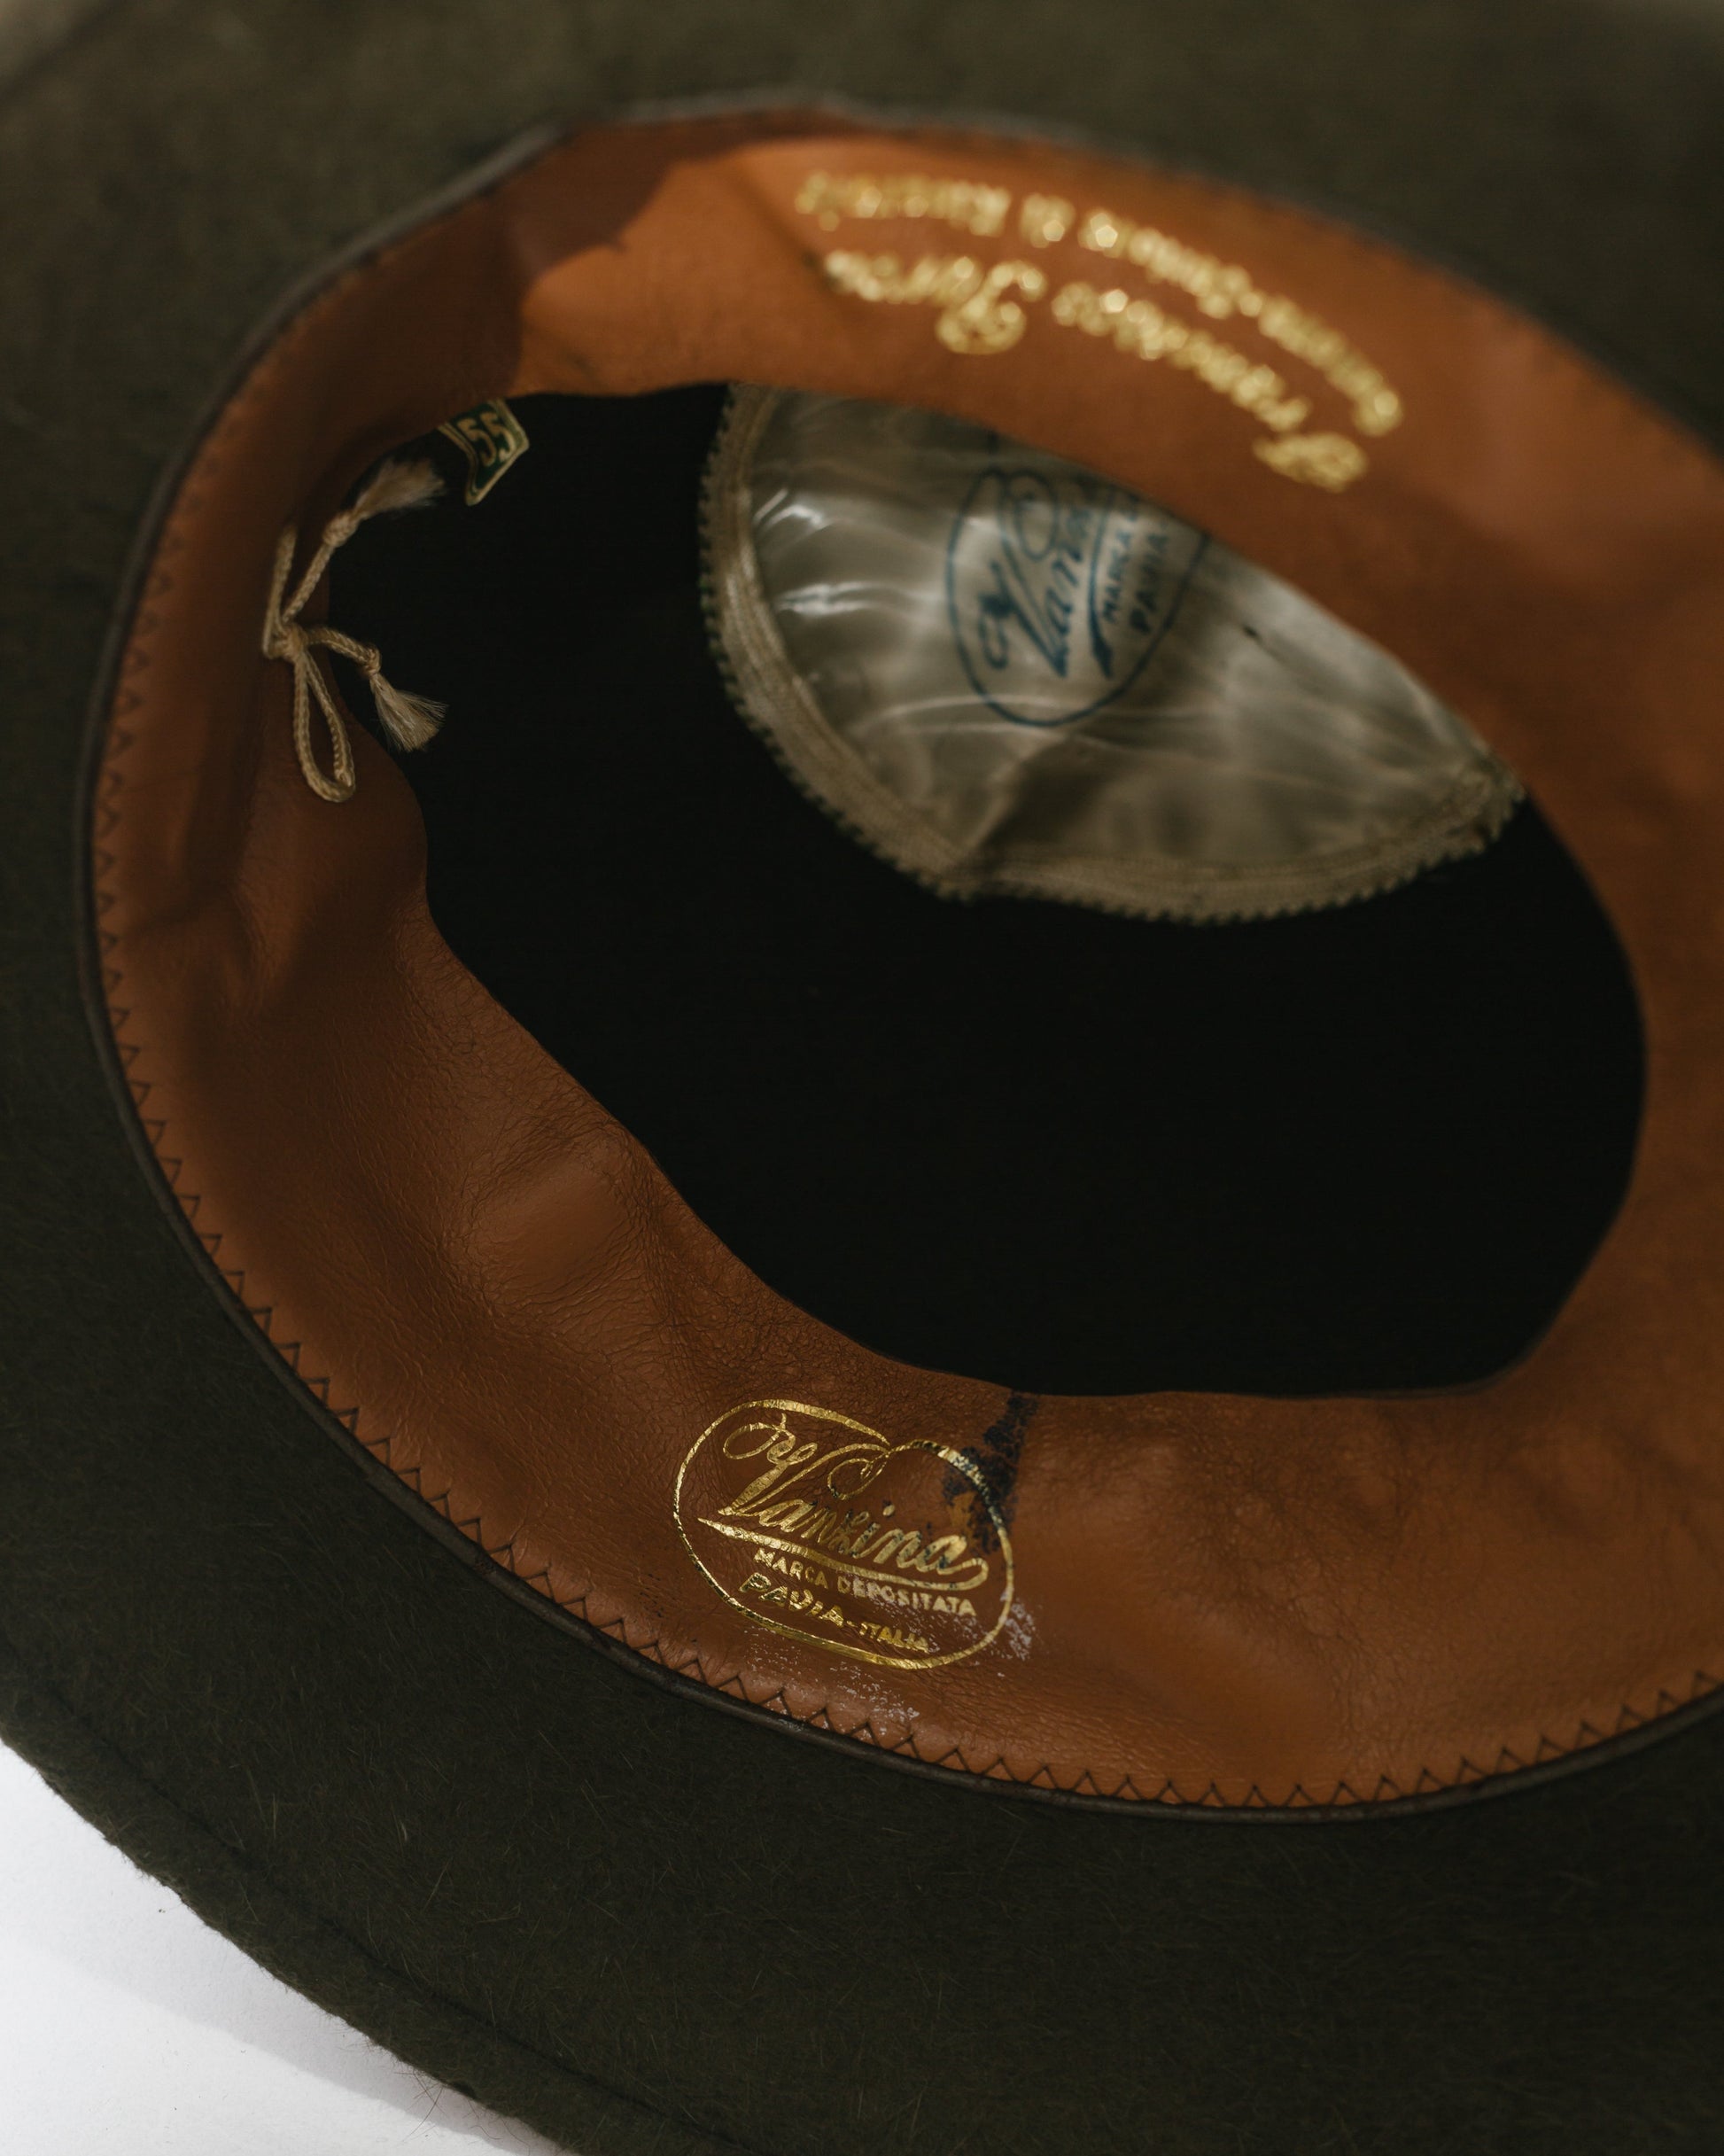 Vintage Leather Lined Fedora Hat